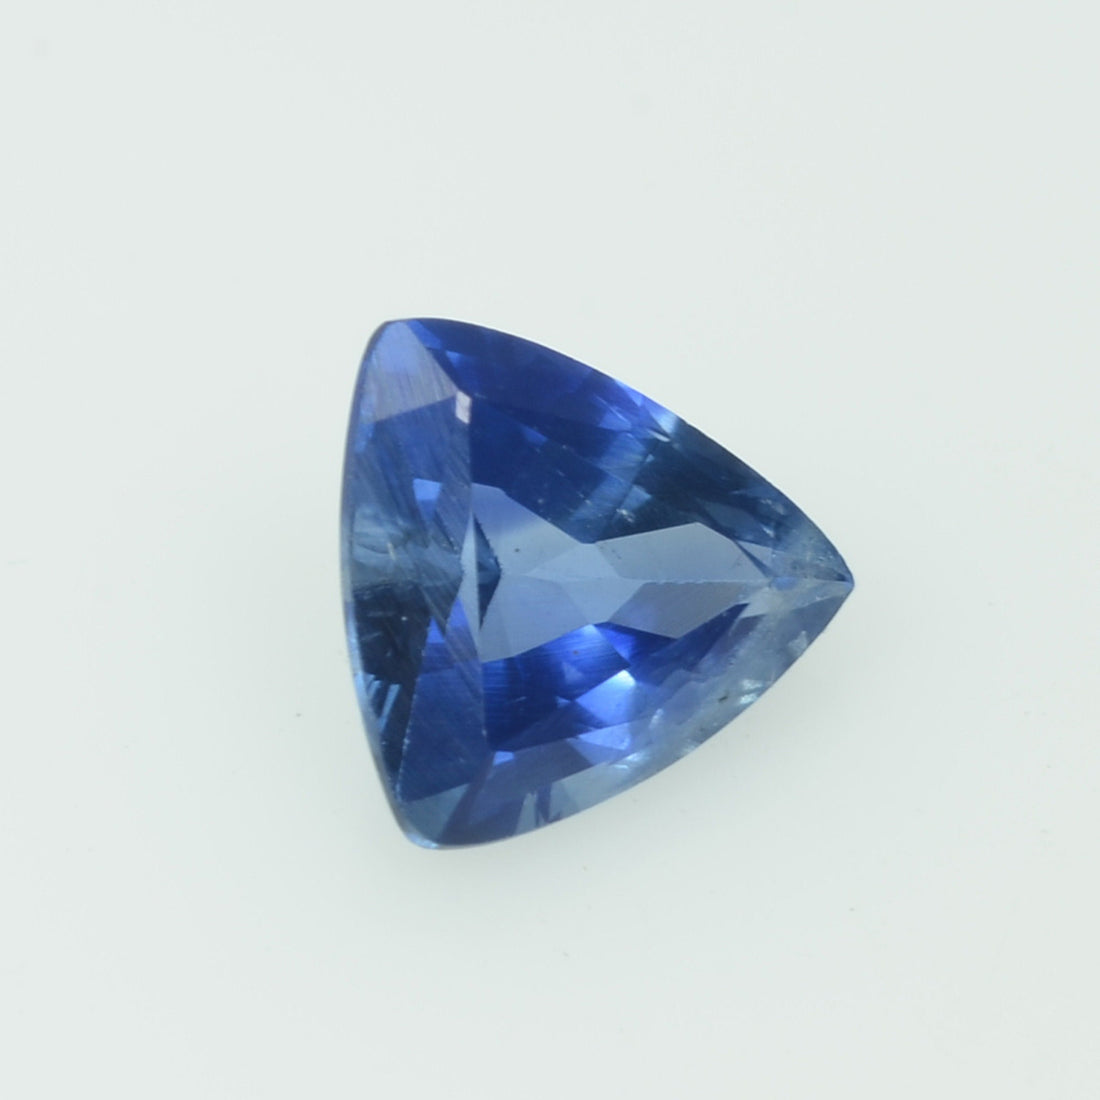 0.53 Cts Natural Blue Sapphire Loose Gemstone Trillion Cut